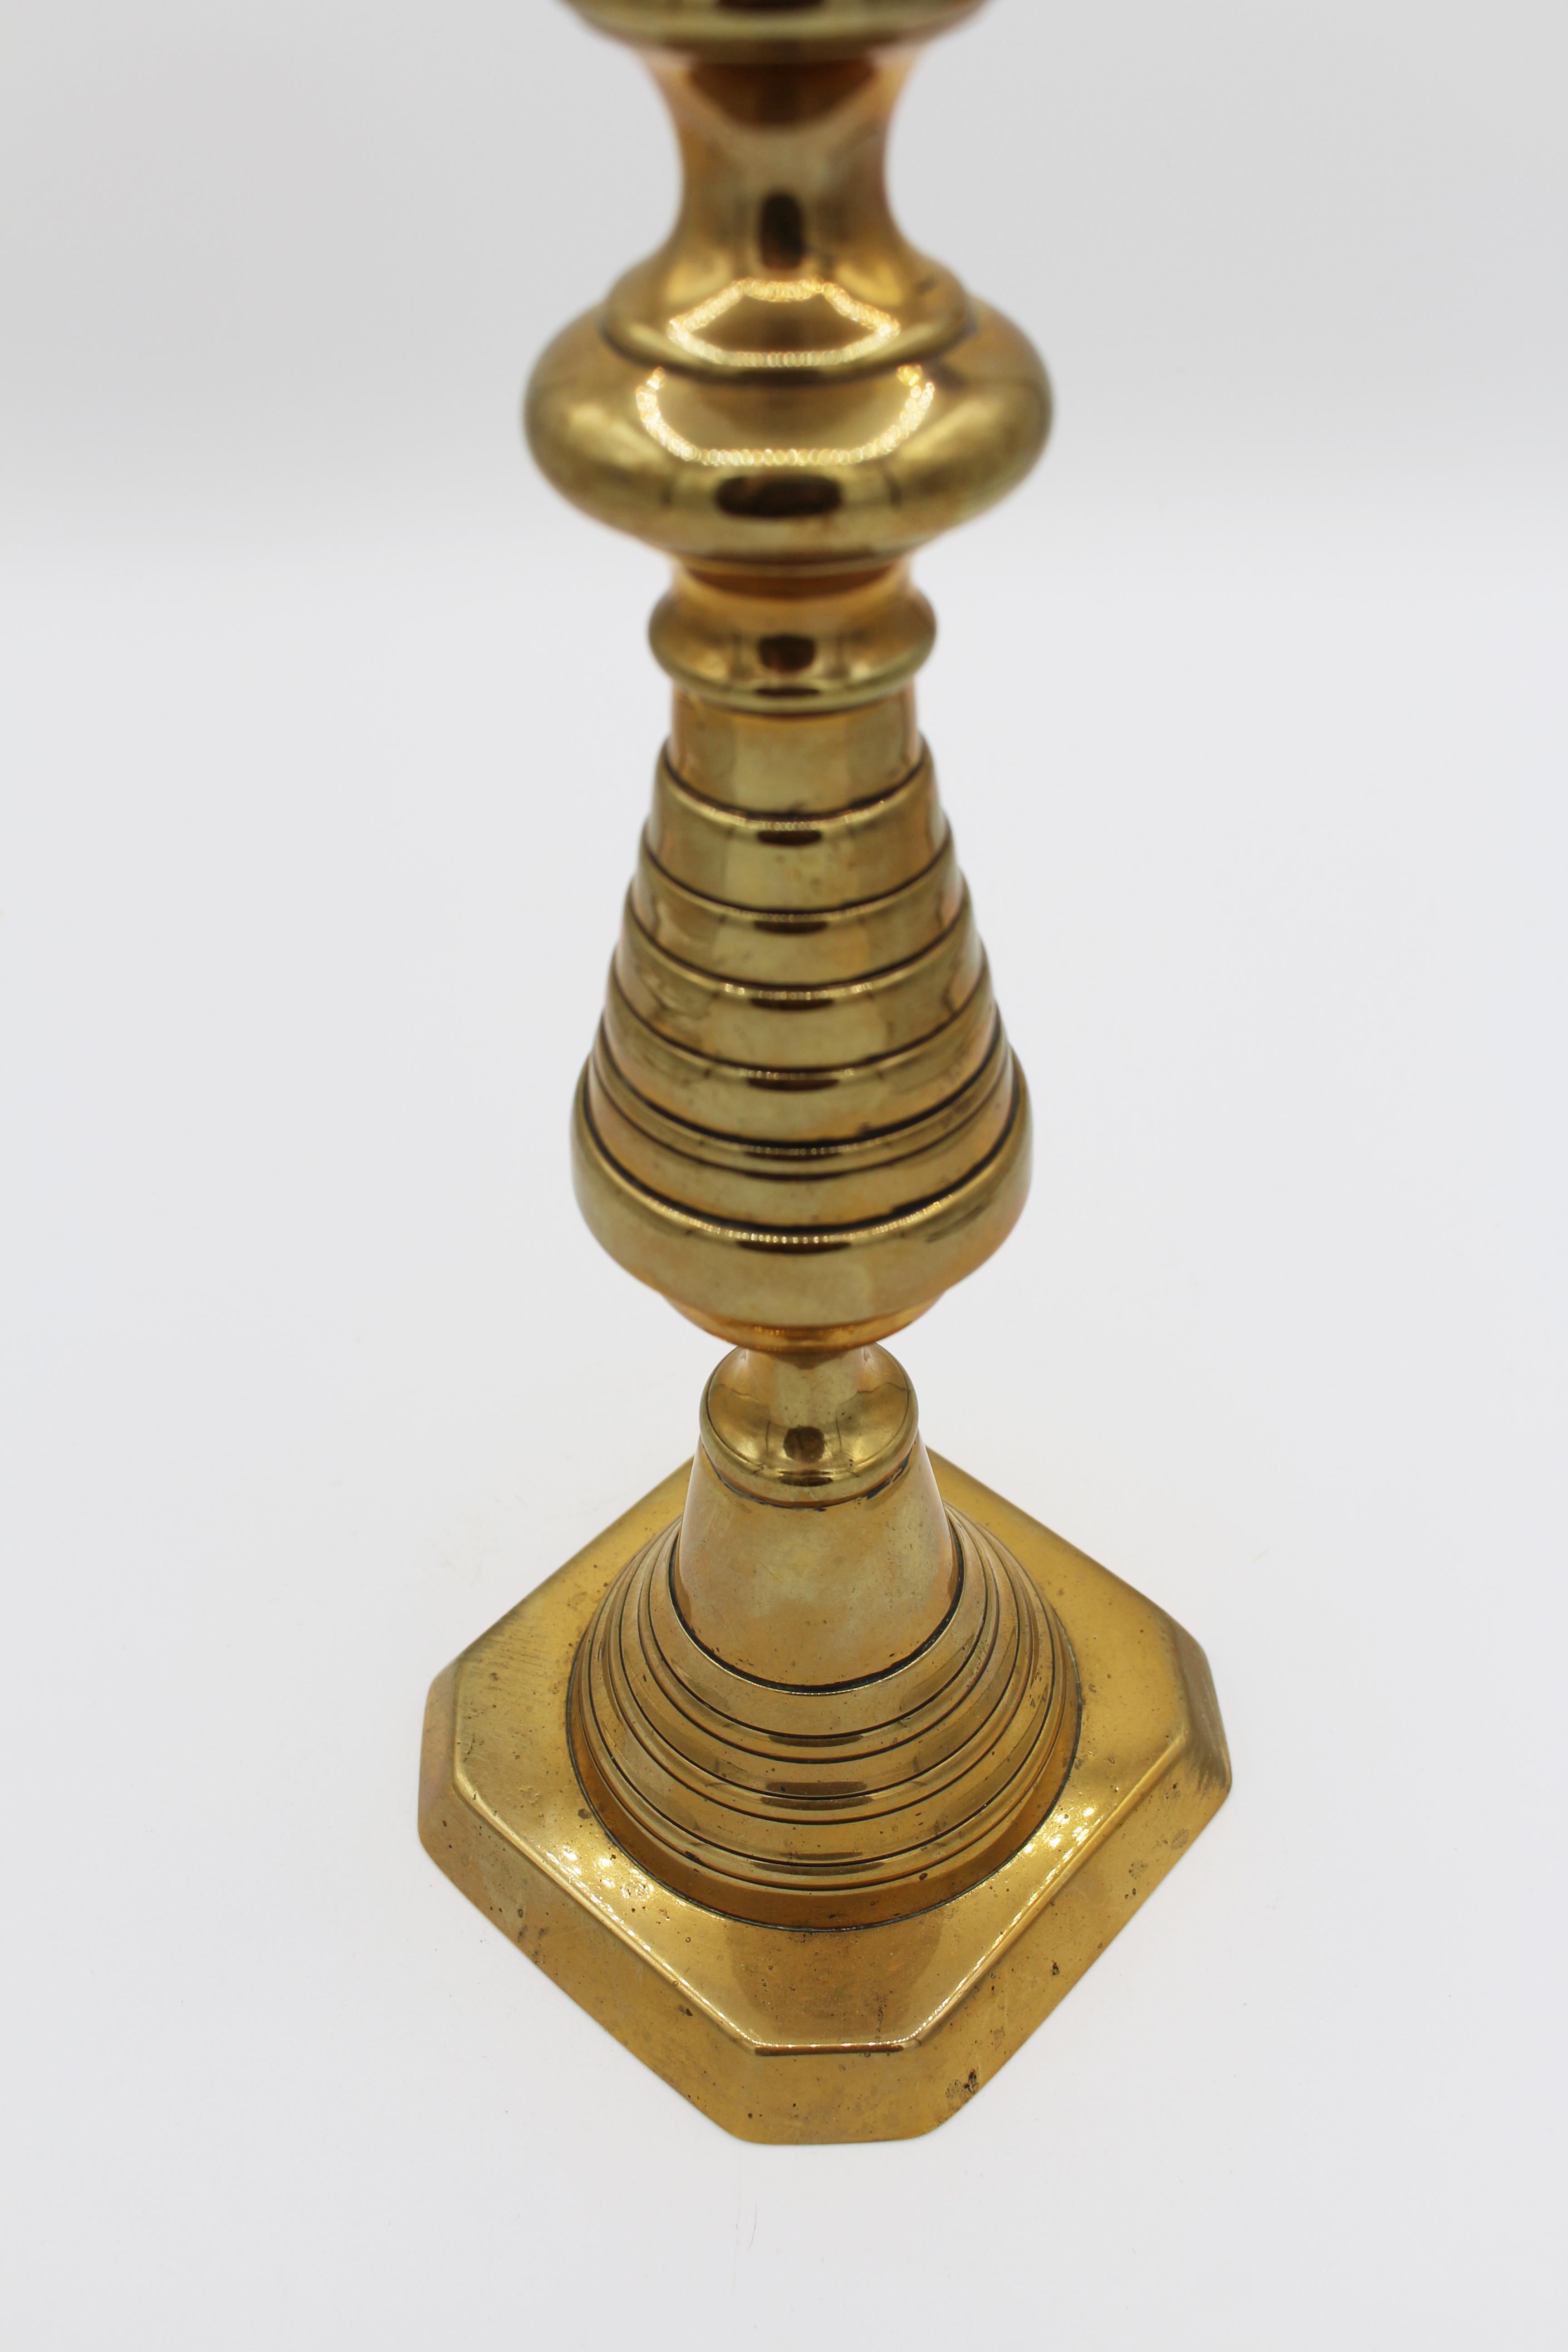 Circa 1860 English Brass Candlesticks, a Pair For Sale 3